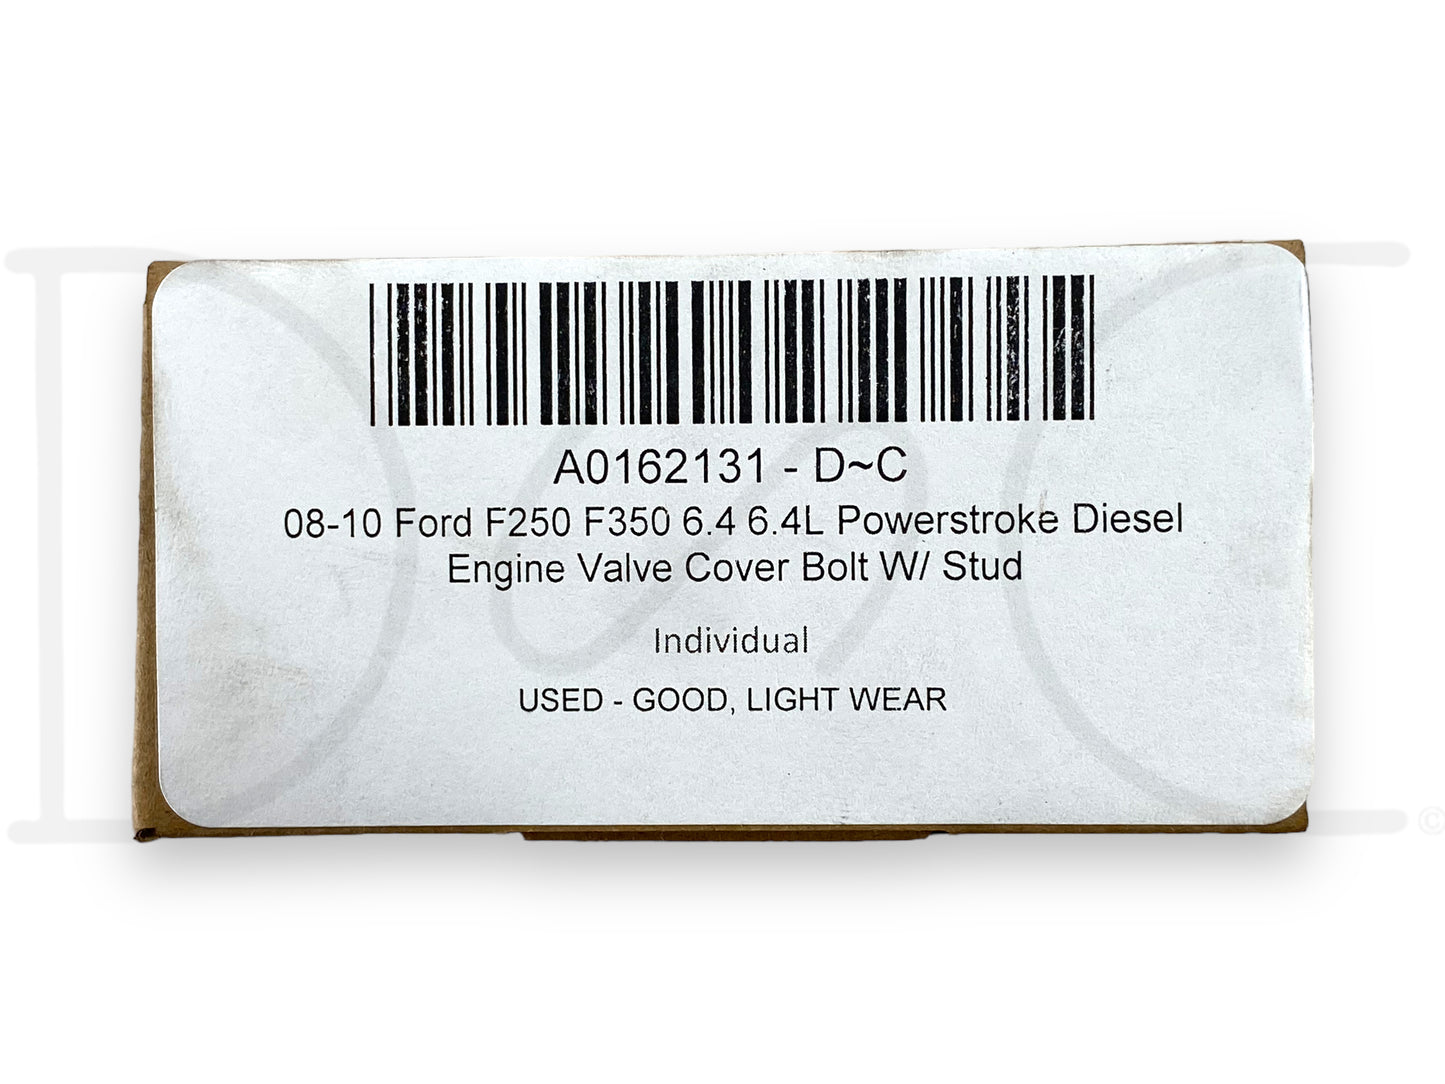 08-10 Ford F250 F350 6.4 6.4L Powerstroke Diesel Engine Valve Cover Bolt W/ Stud